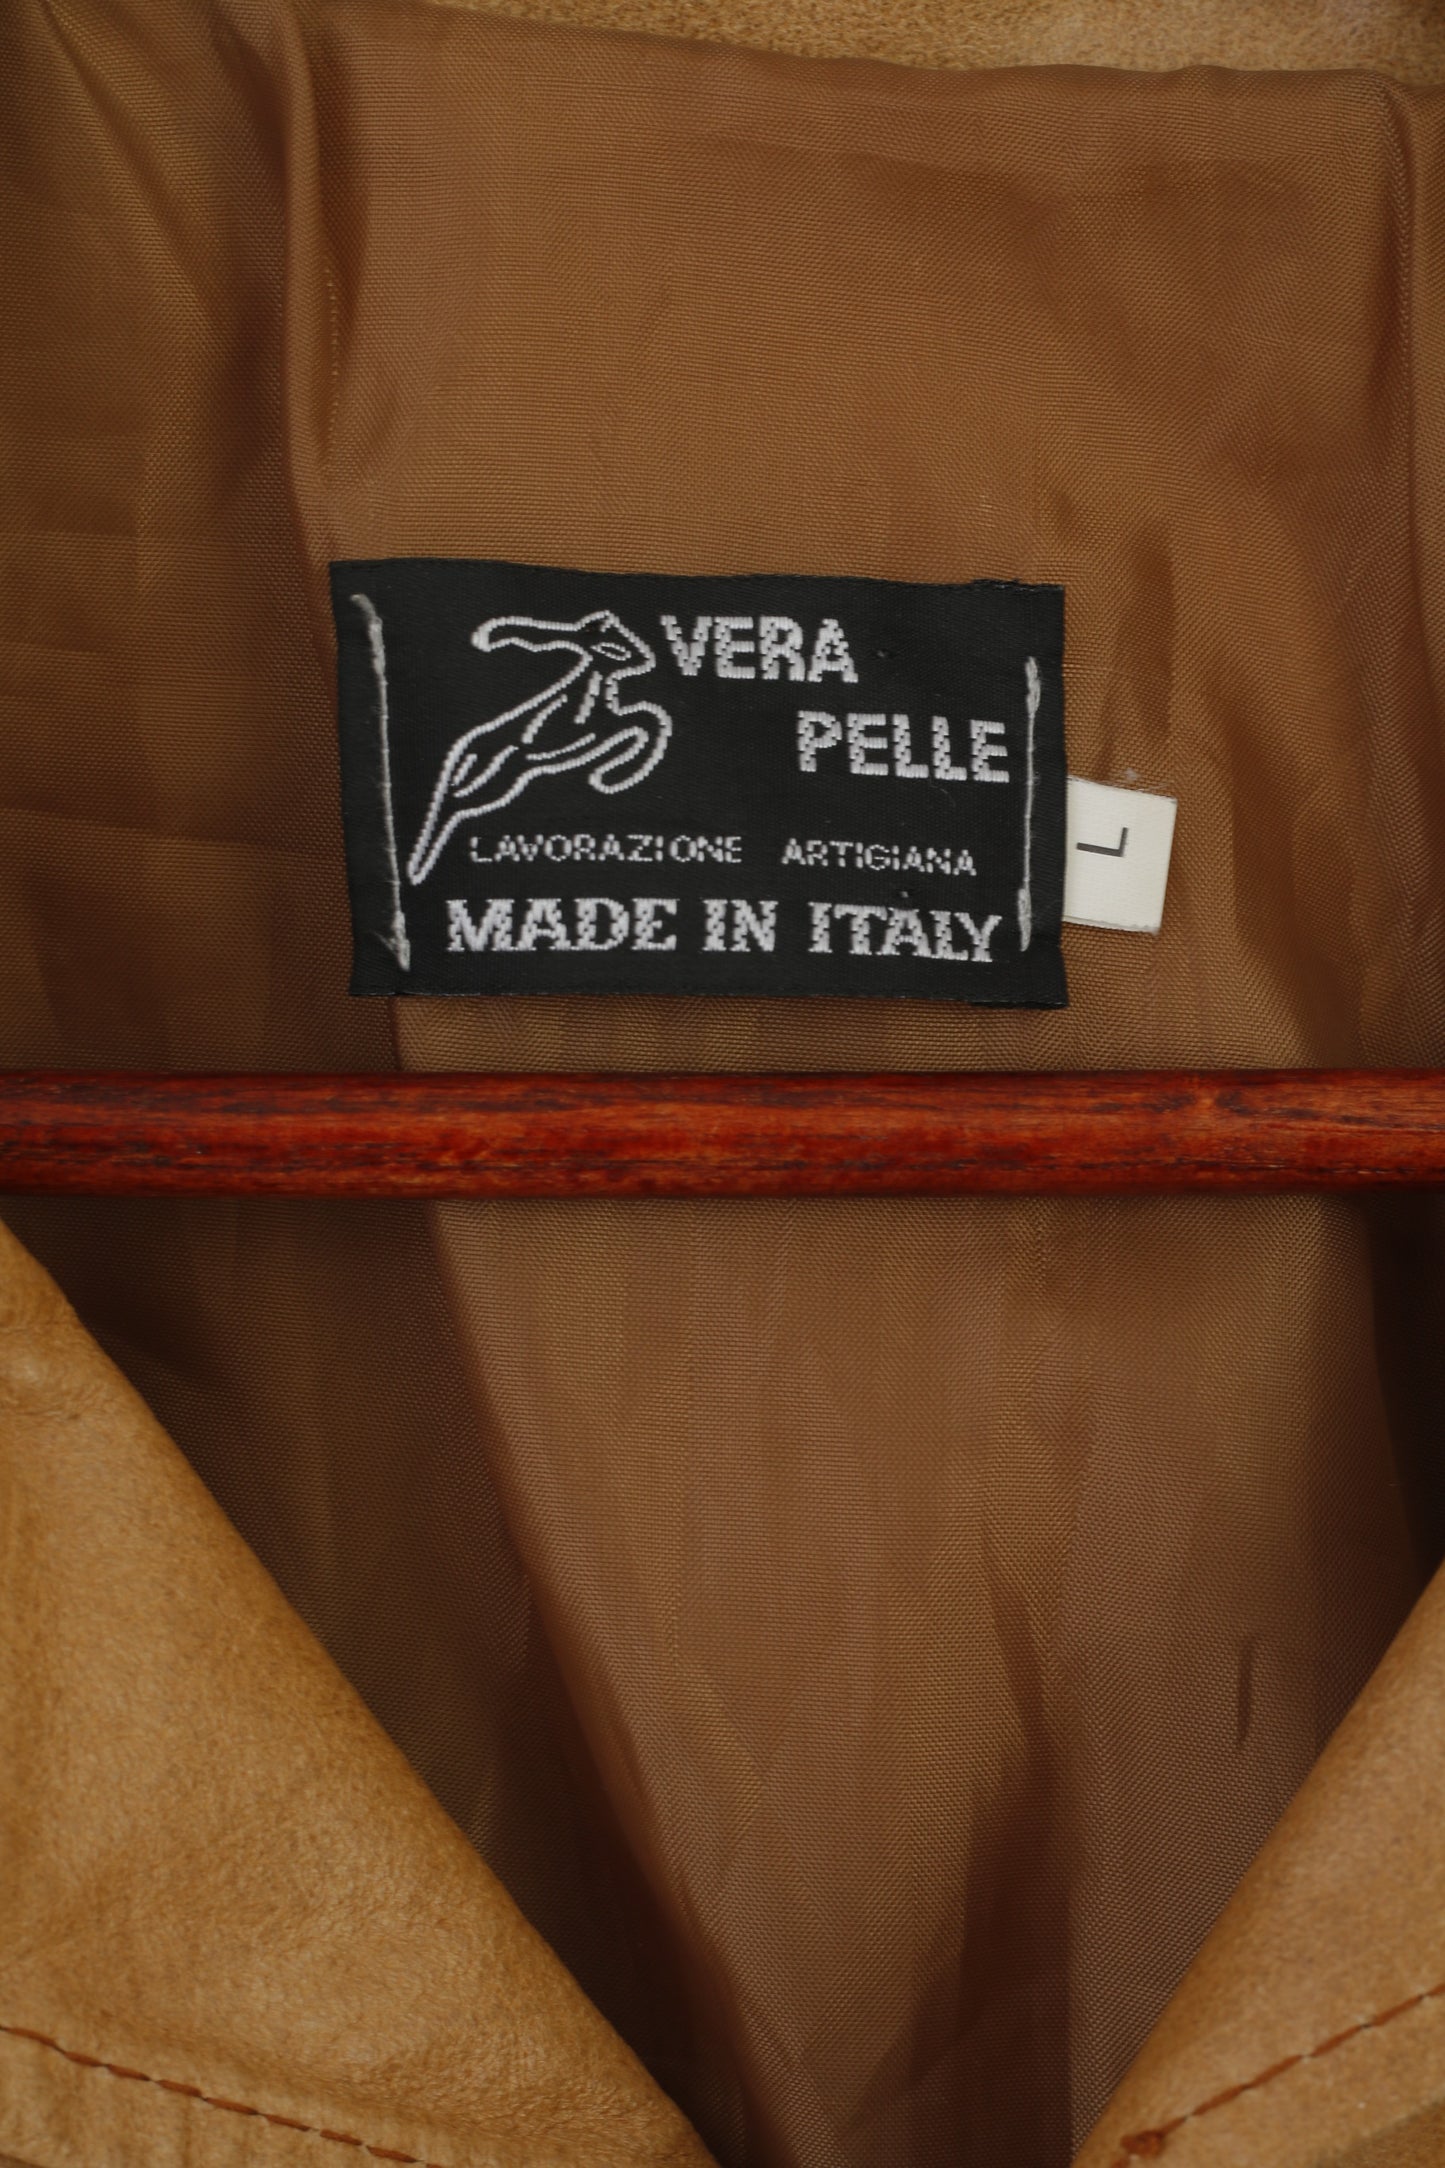 Lavorazione Artigiana Men L (M) Leather Jacket Camel Leather Made in Italy Classic Vintage Top